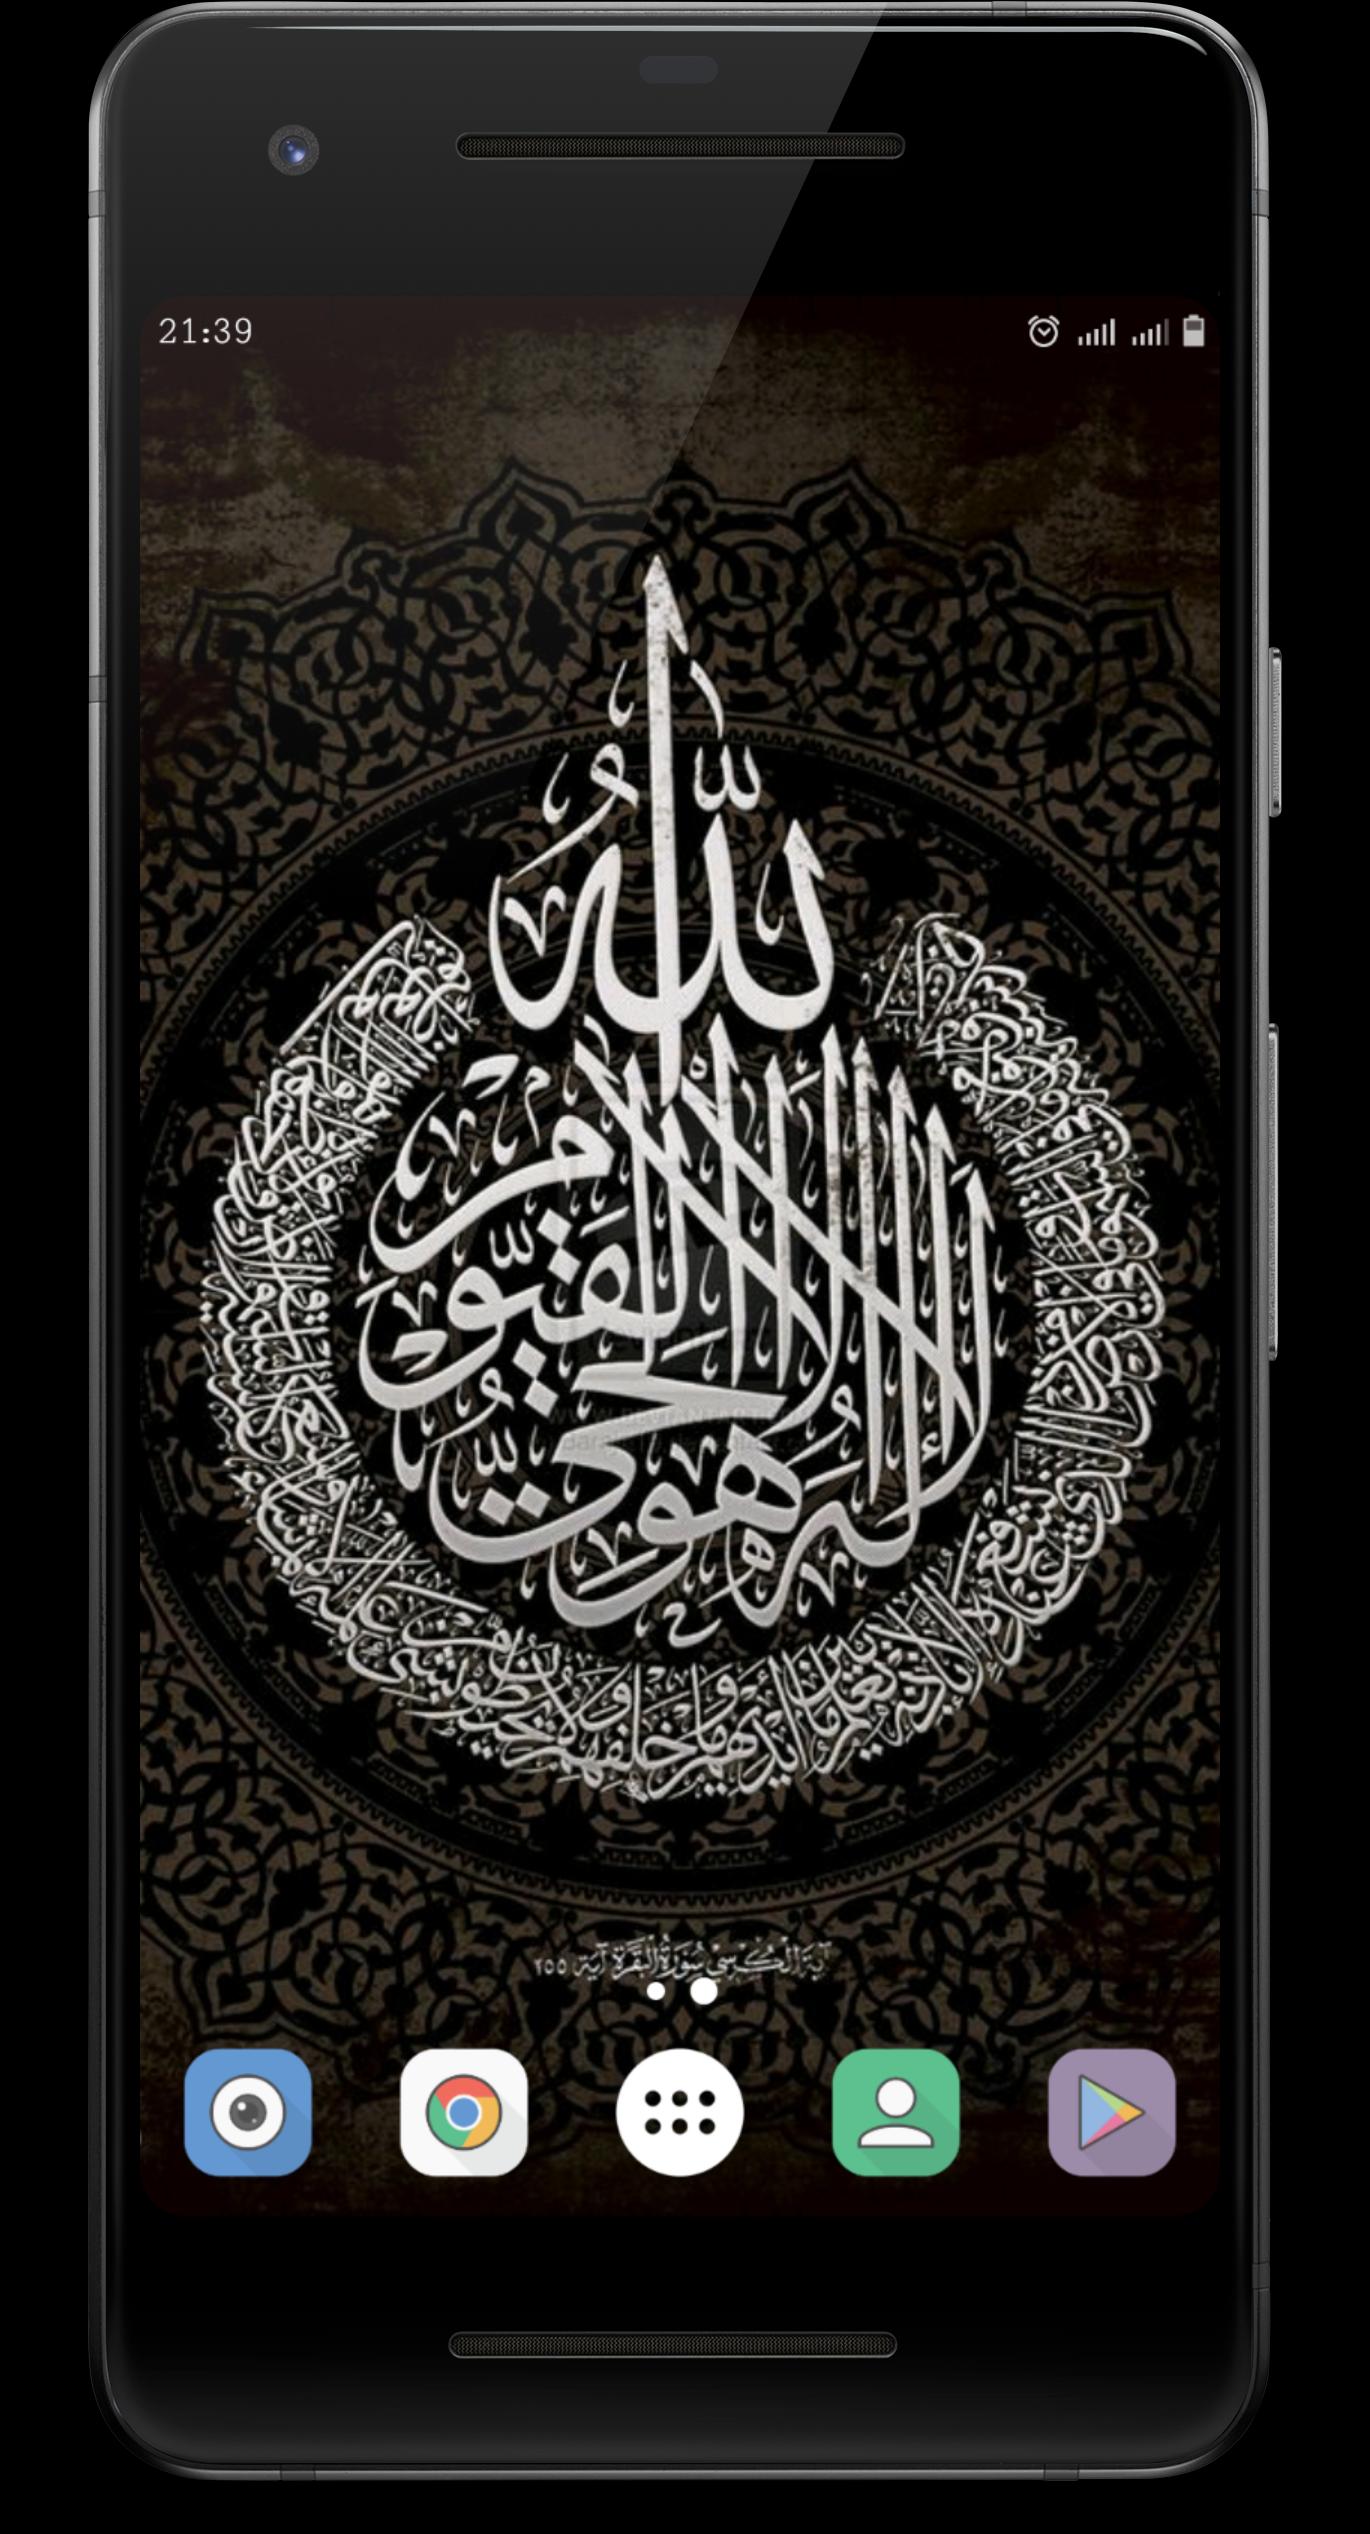 Wallpaper Android Islami